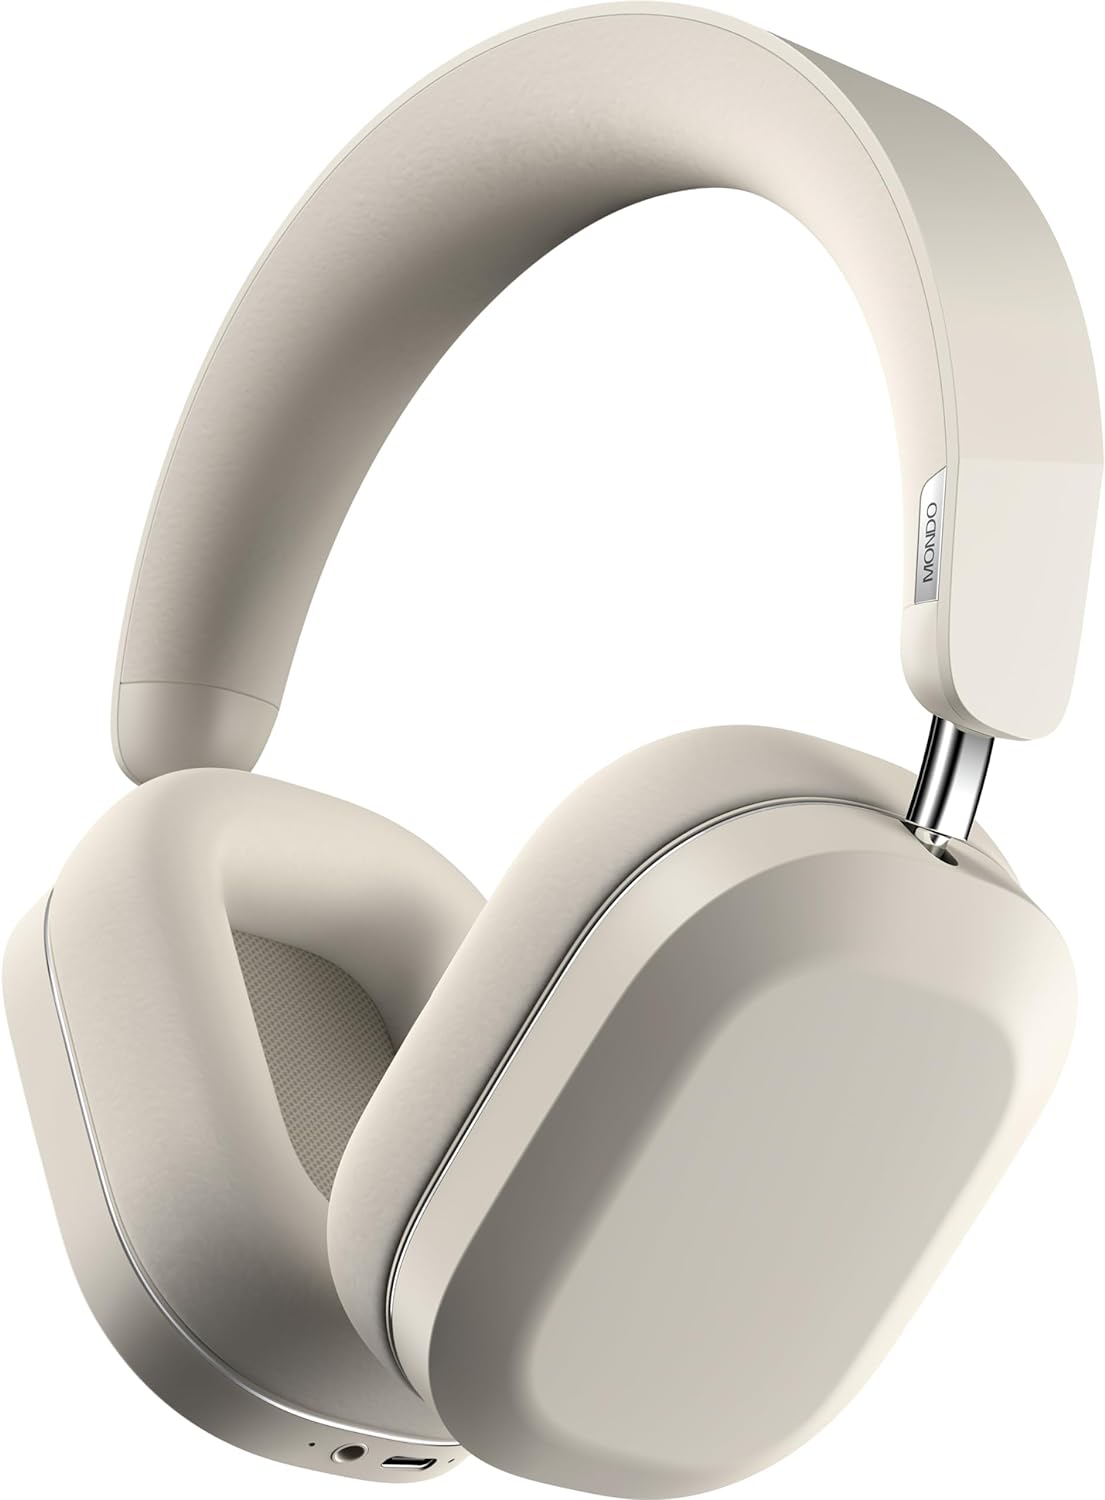 Defunc Mondo Headphones Review: Impressive Sound Quality and Comfort